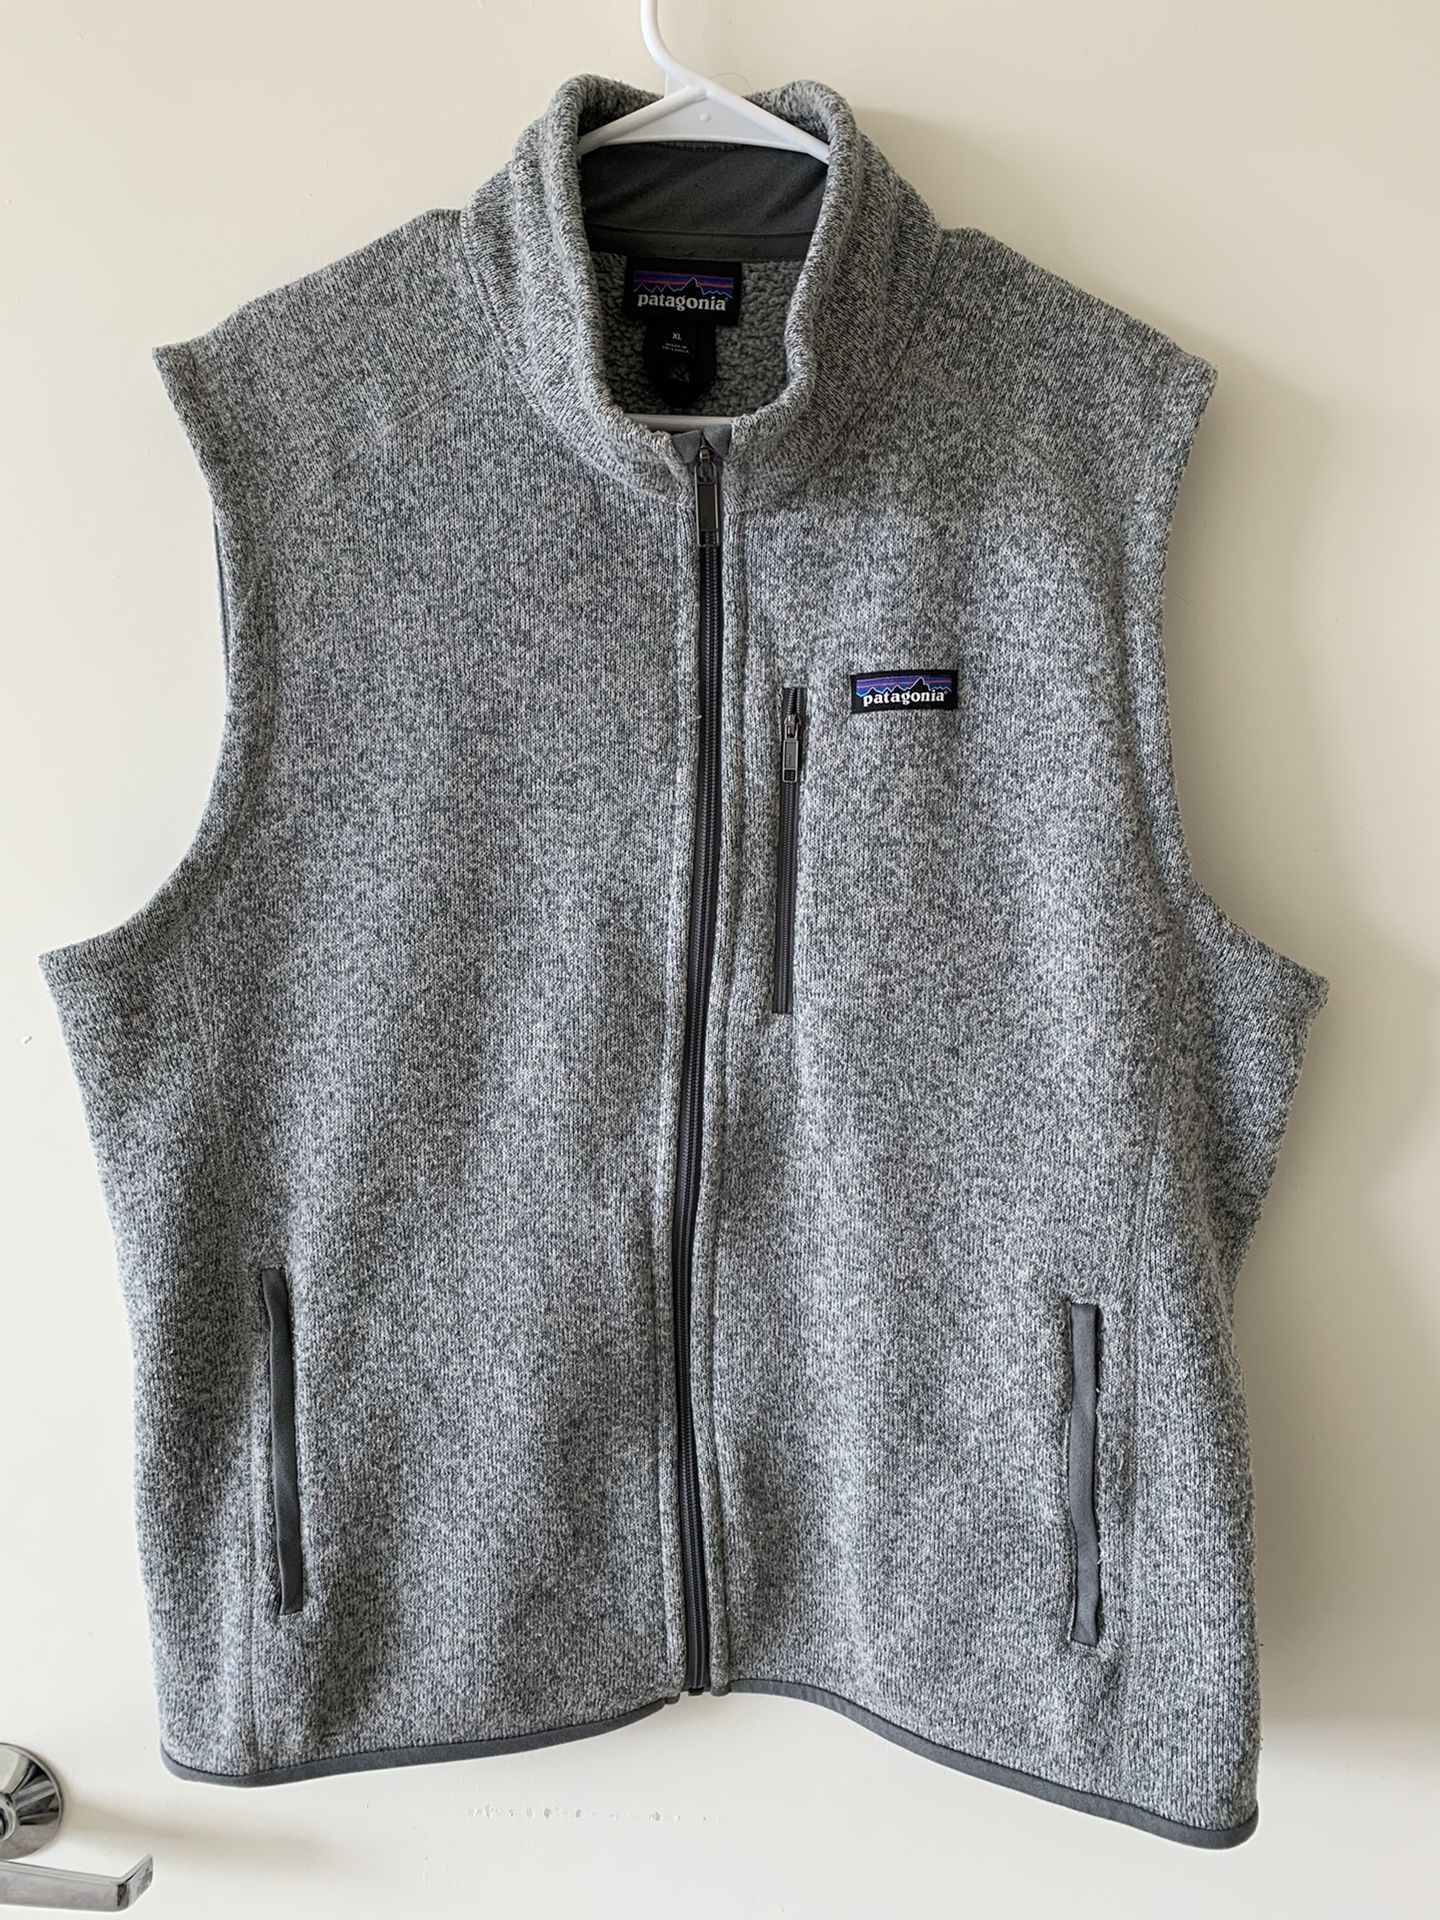 Patagonia Better Sweater Vest - Stonewash / Grey - Size XL